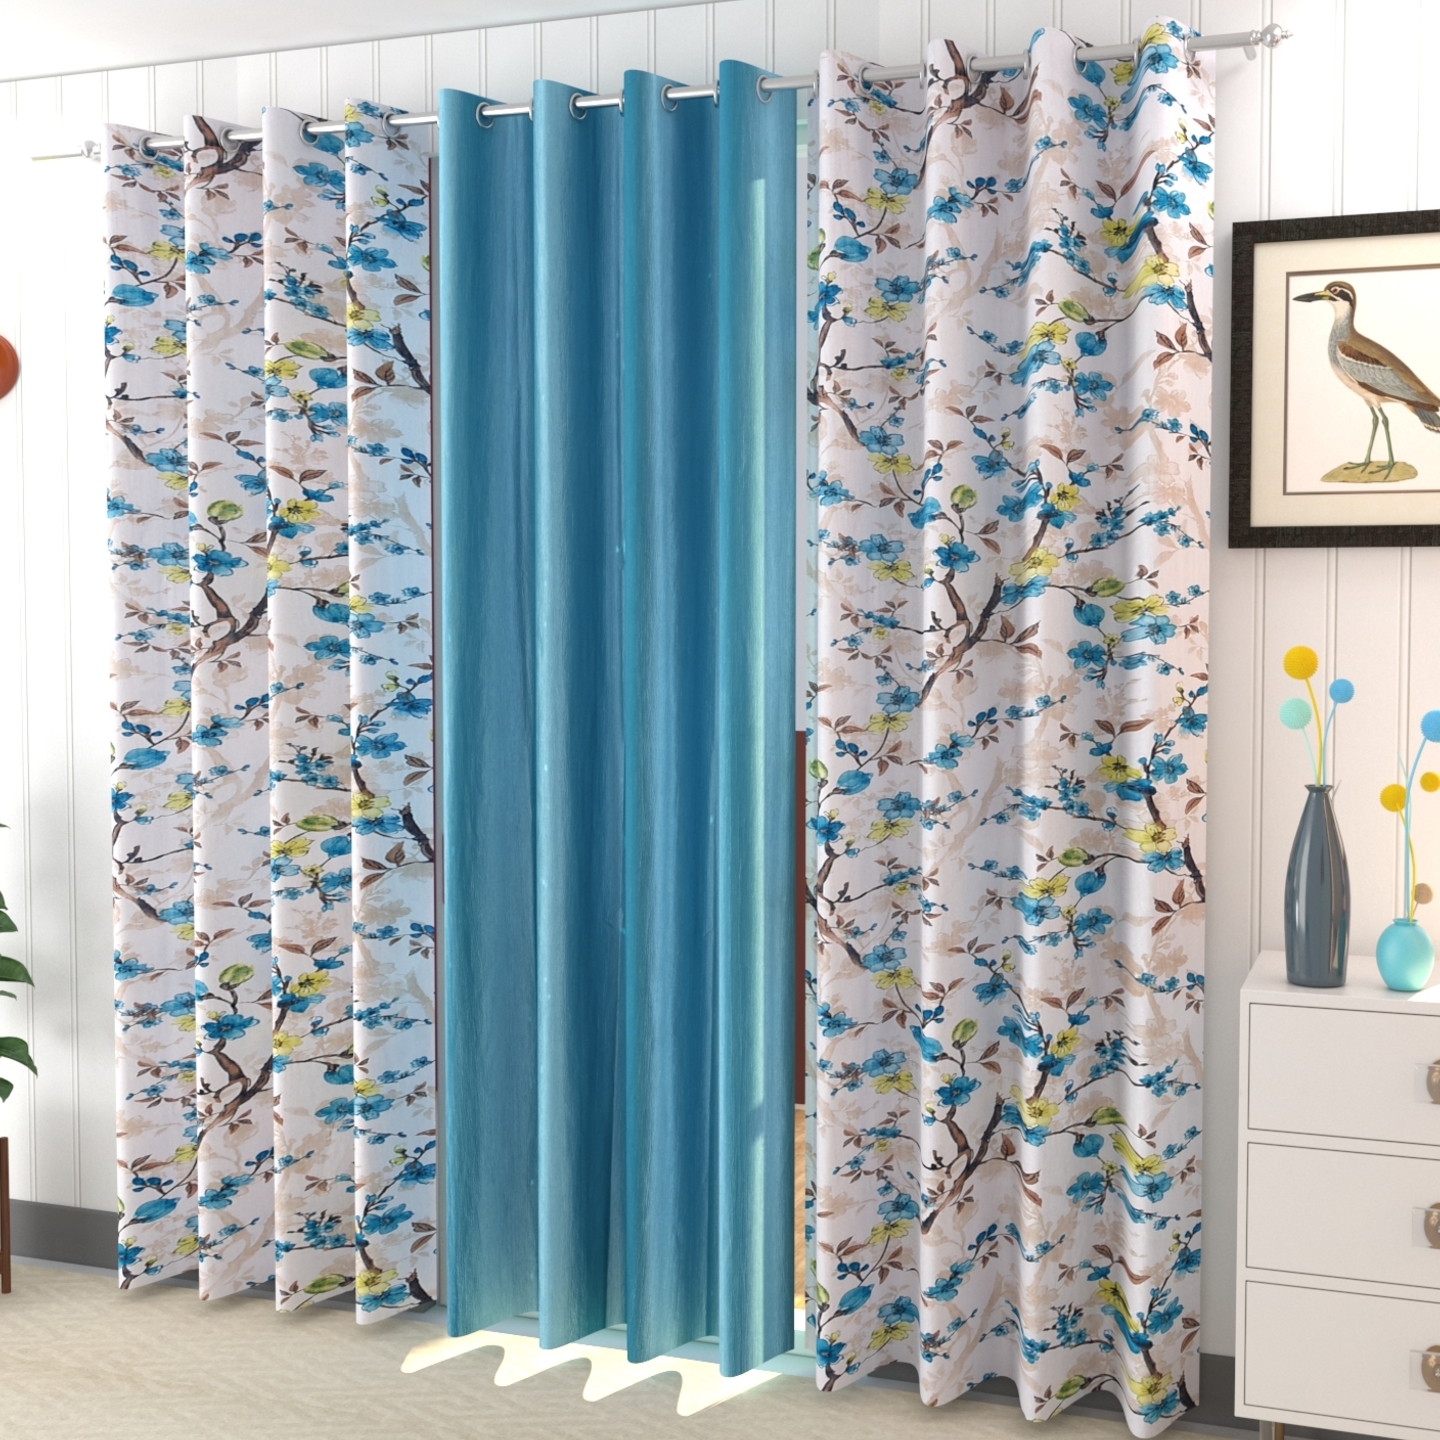 Handtex Home Polyester Digital Print Eyelet Curtain Set of 3 Pcs 4feet x 9feet Aqua